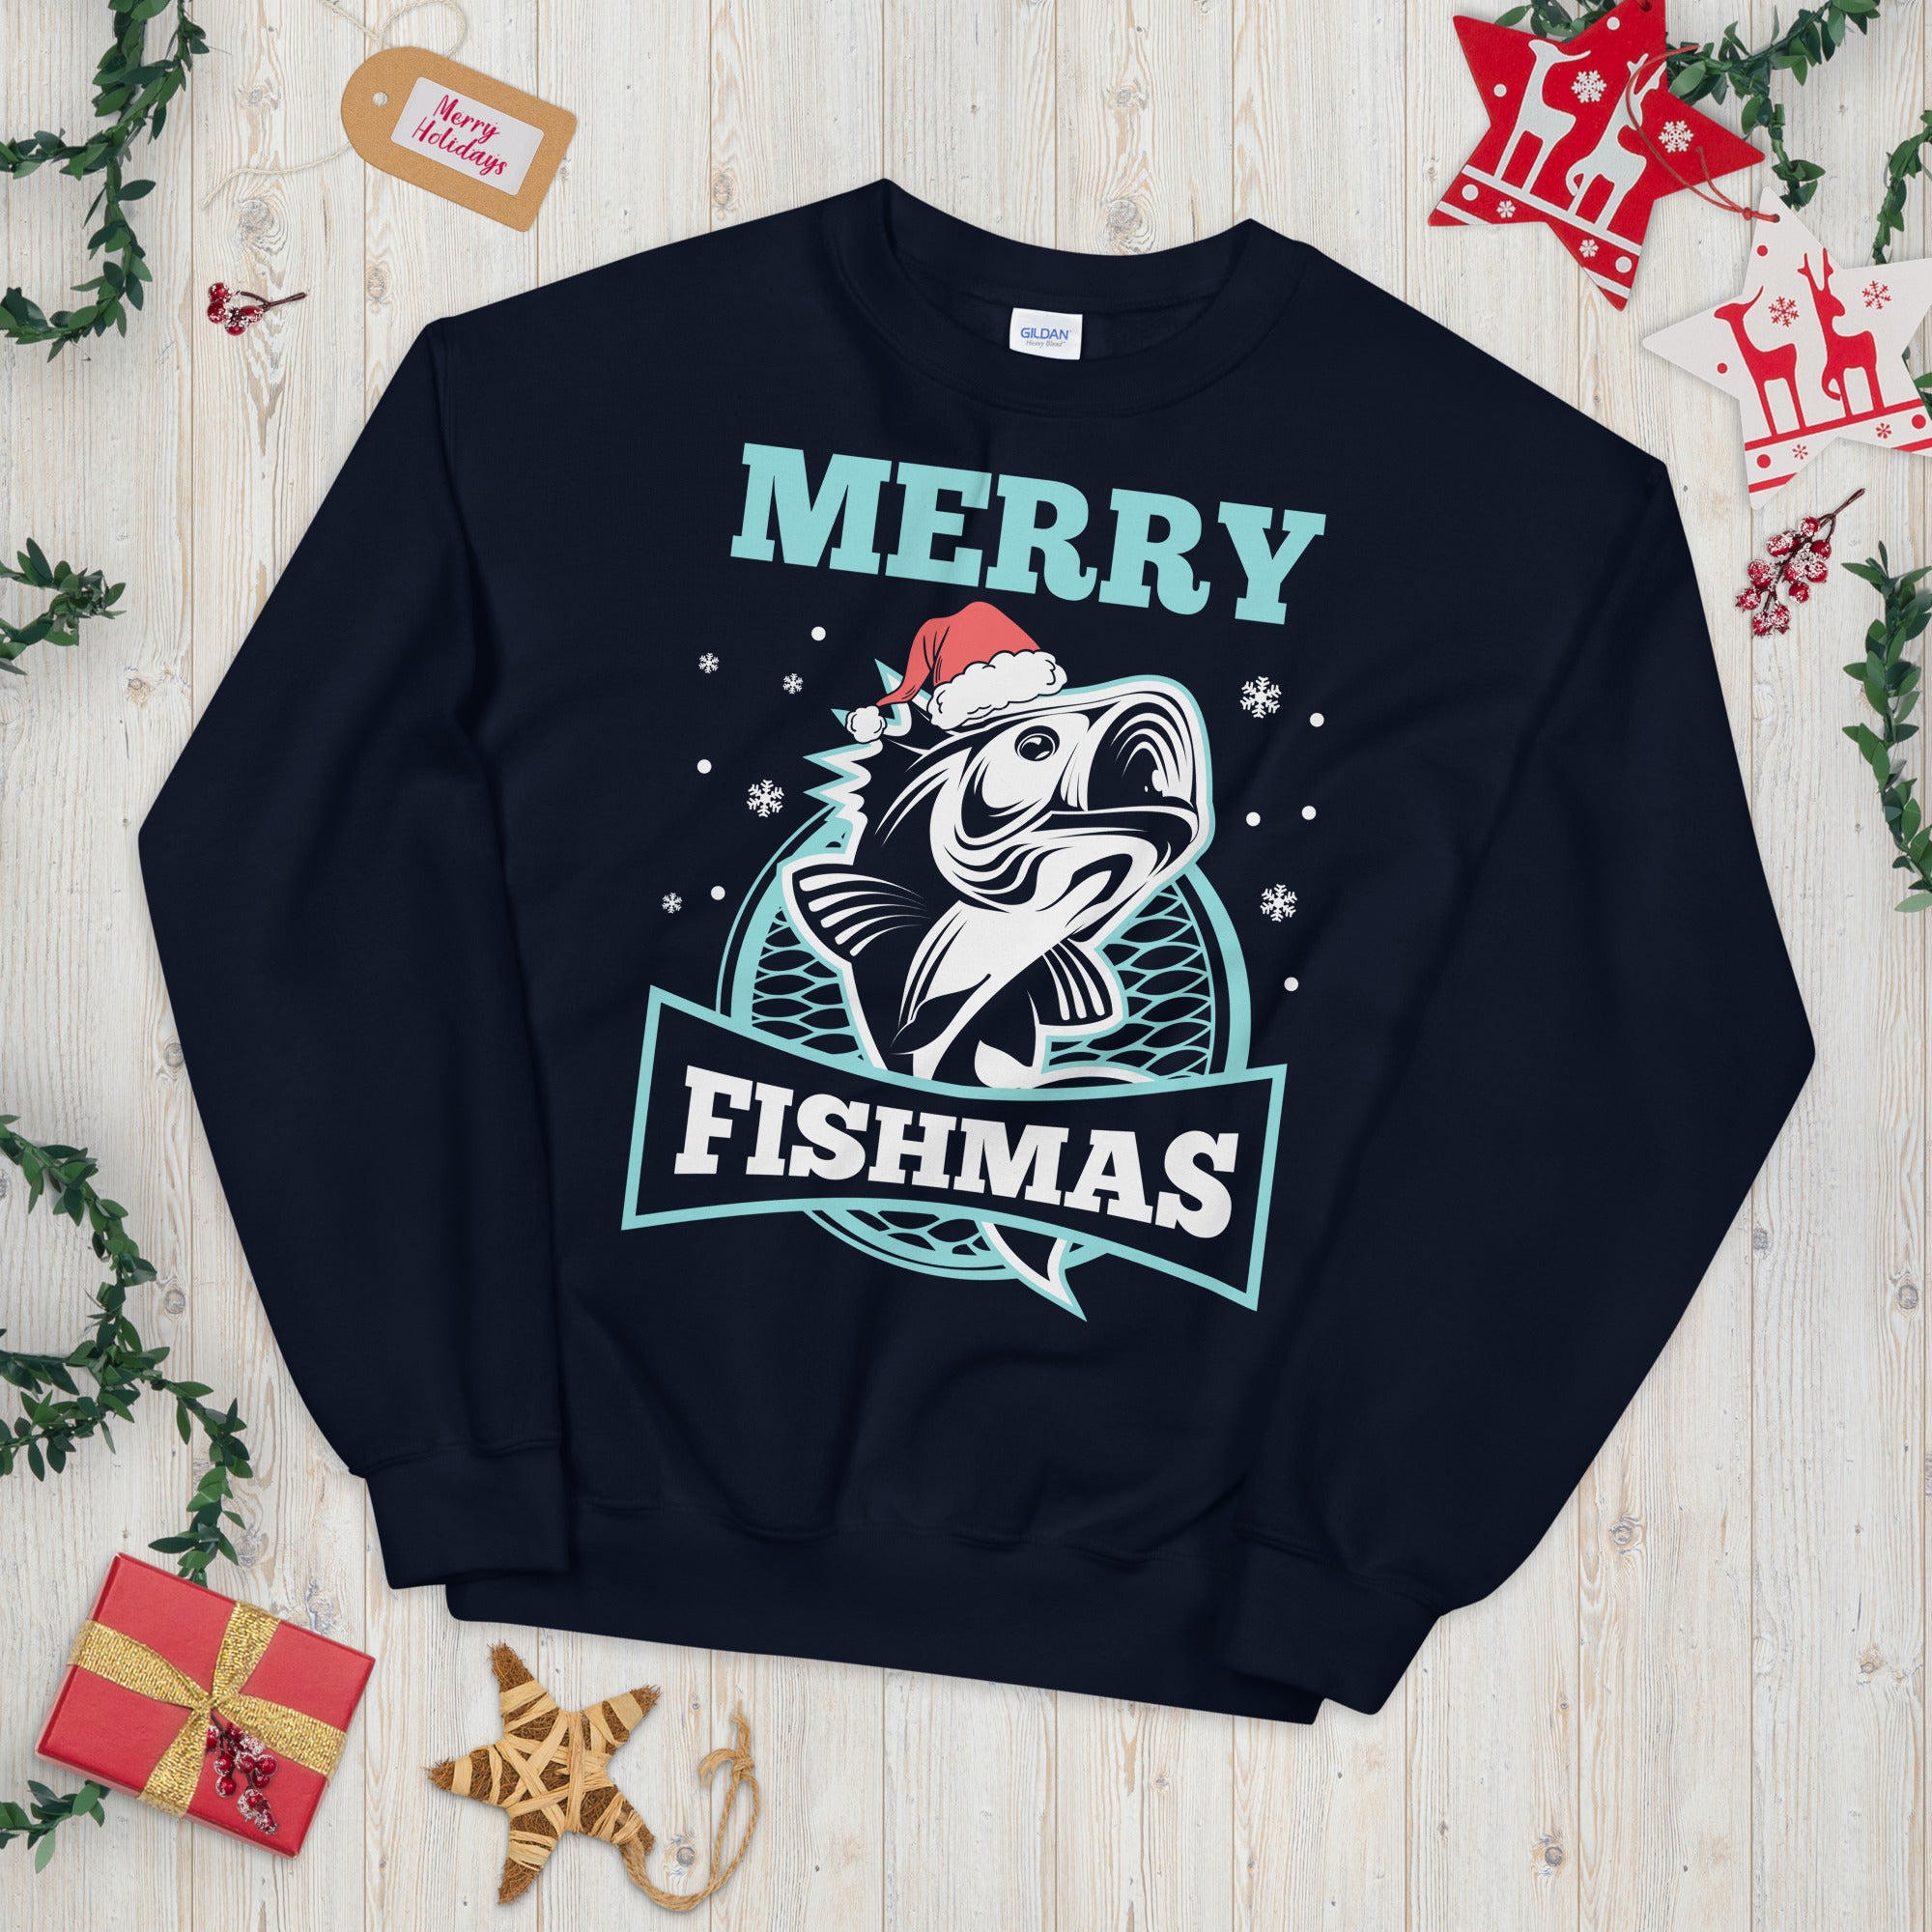 Merry Fishmas Sweater, Christmas Fishing Sweatshirt, Fishing Lover, Fishing Man Shirt, Ugly Christmas Sweater, Fisherman Santa Sweatshirt - Madeinsea©